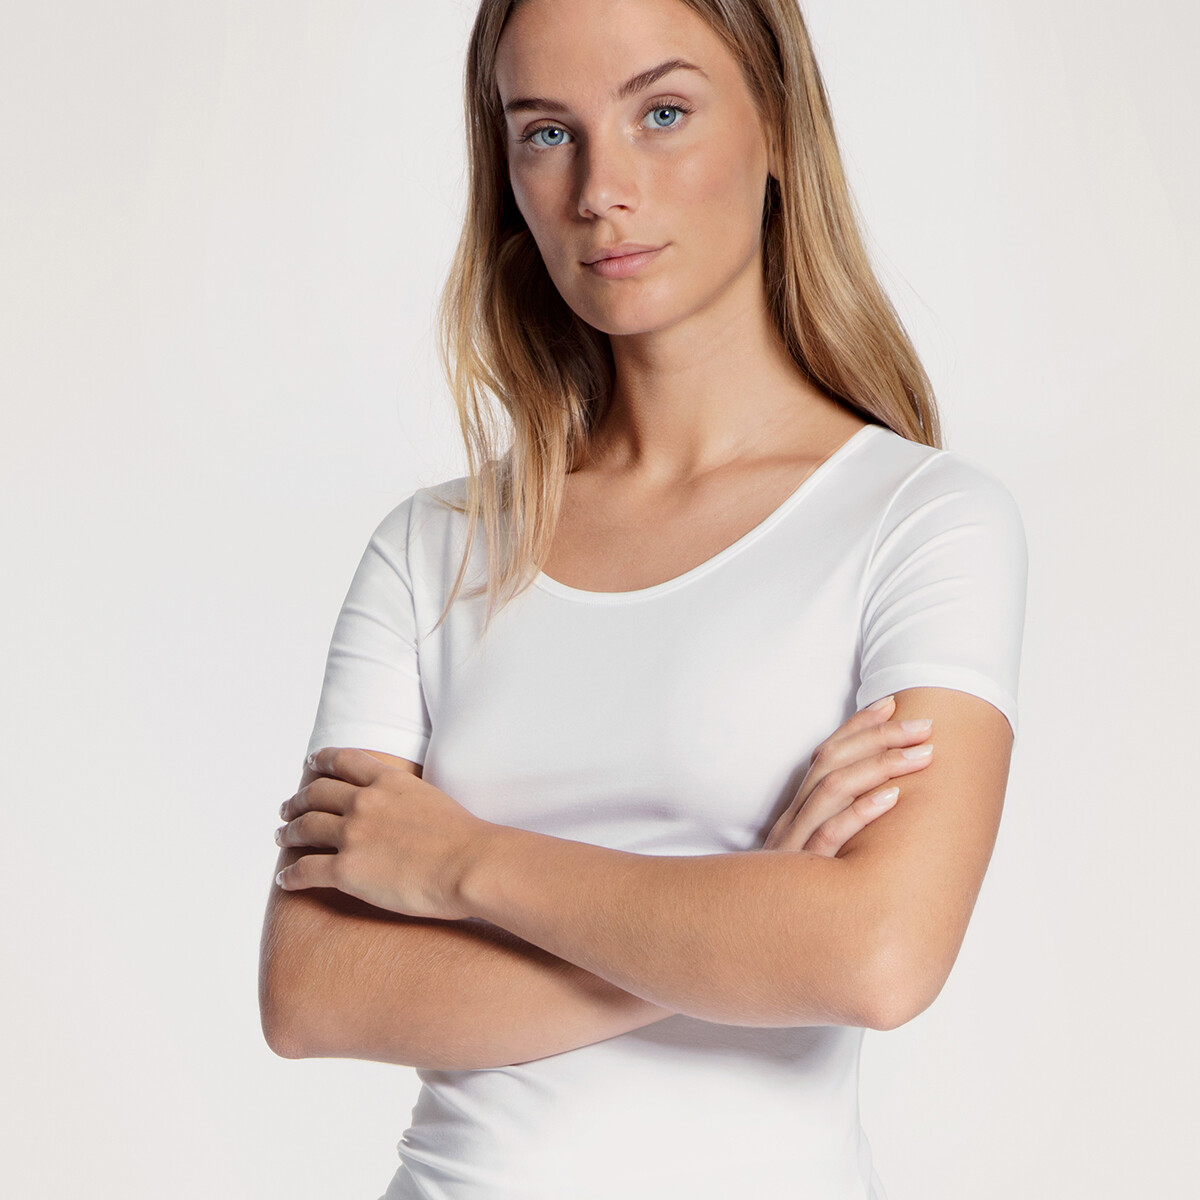 Se Calida T-shirt, Farve: Hvid, Størrelse: M, Dame hos Netlingeri.dk